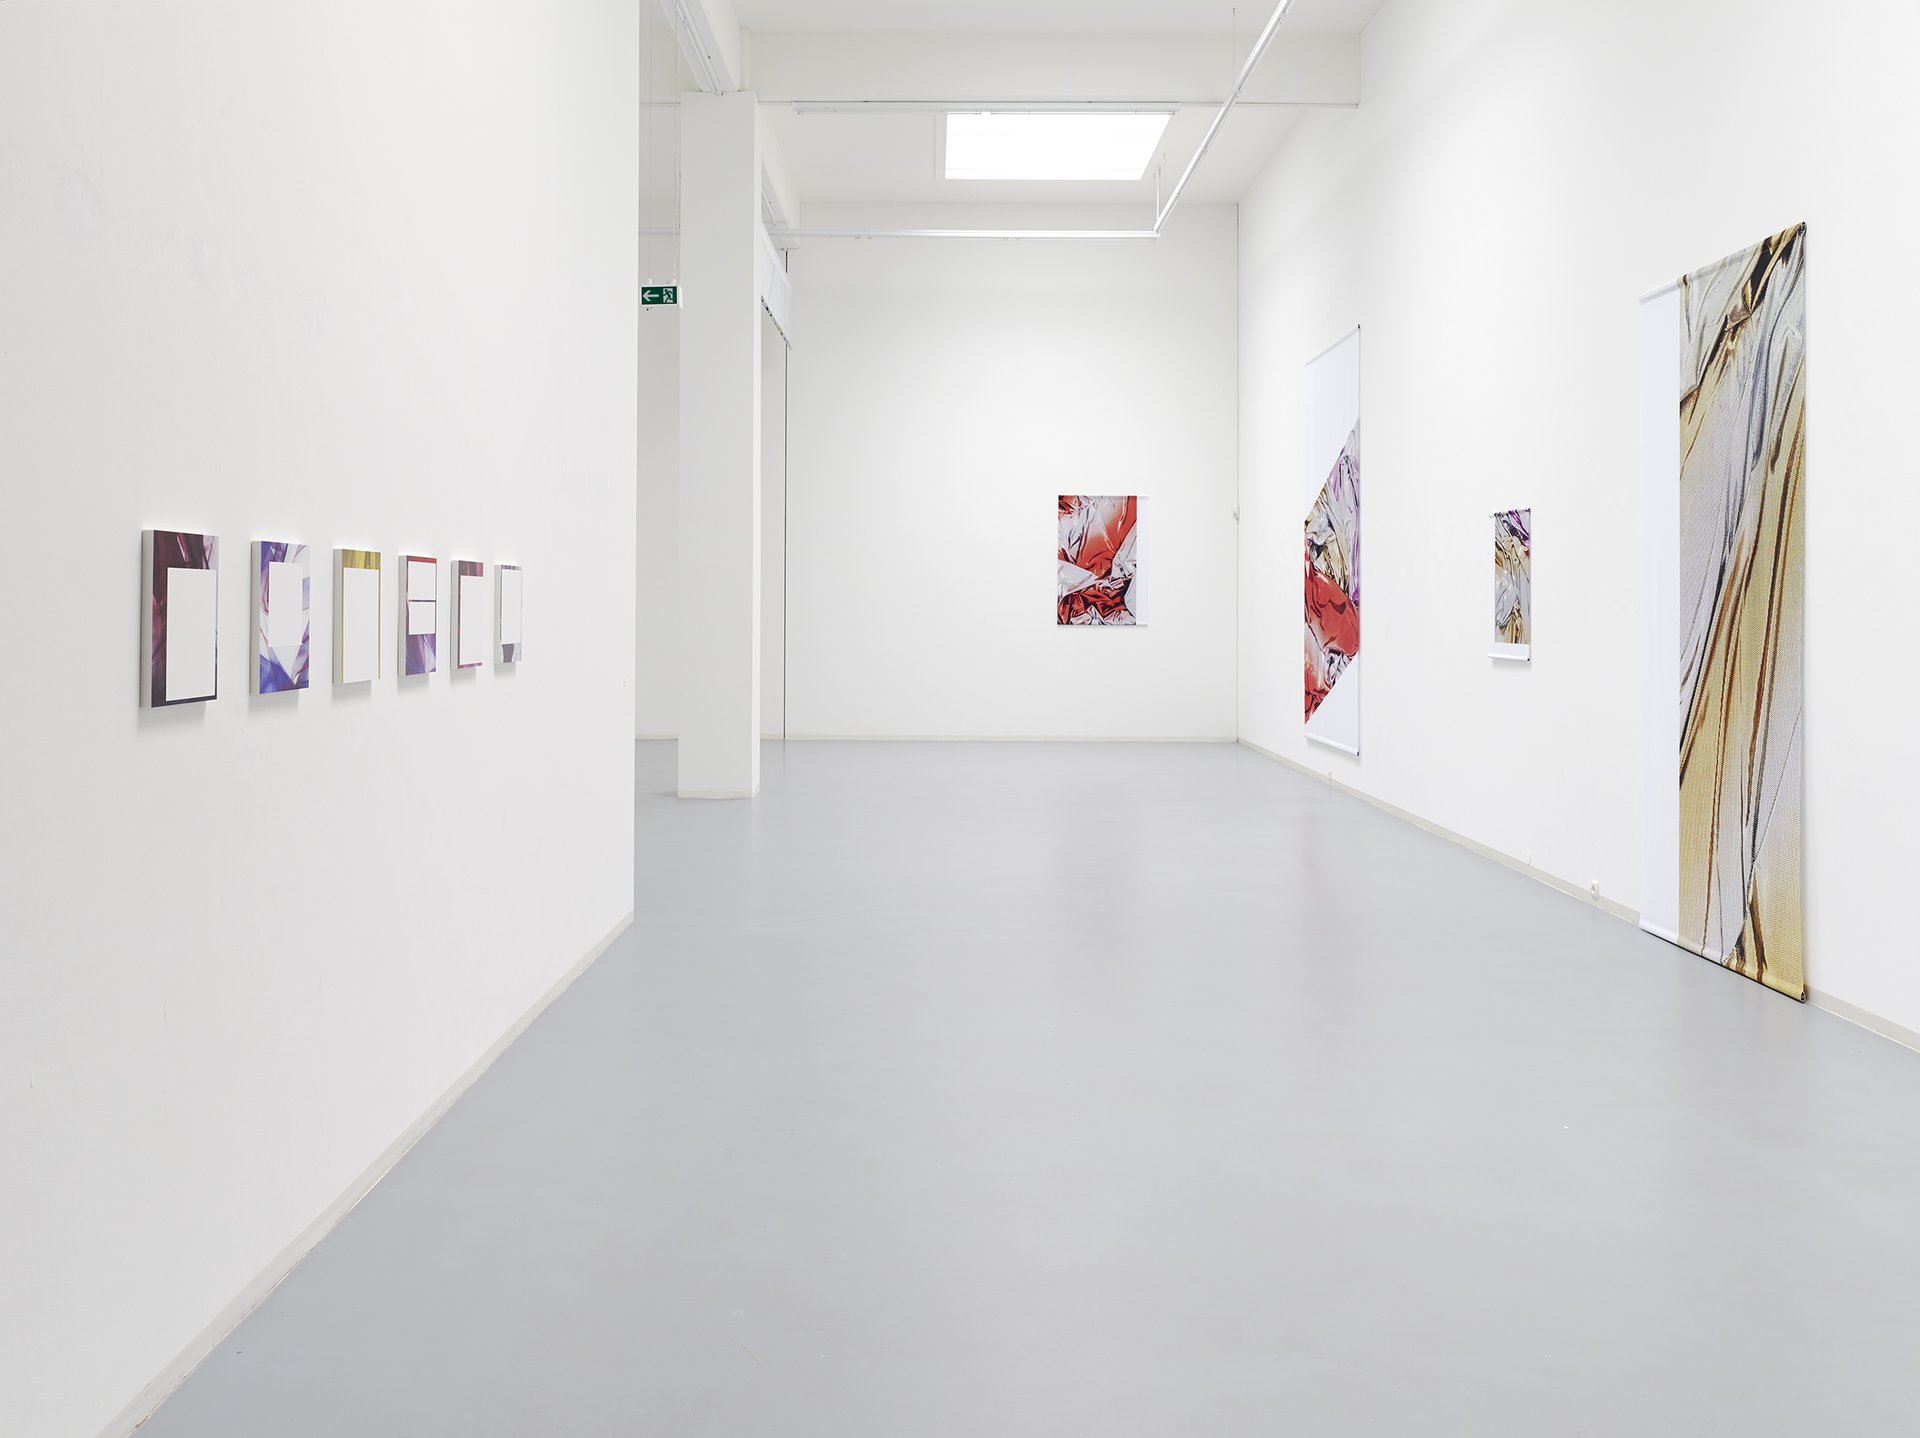 Anne Pöhlmann, installation view, 2014, Bonner Kunstverein, Courtesy the artist and Clages, Cologne. Photo: Simon Vogel